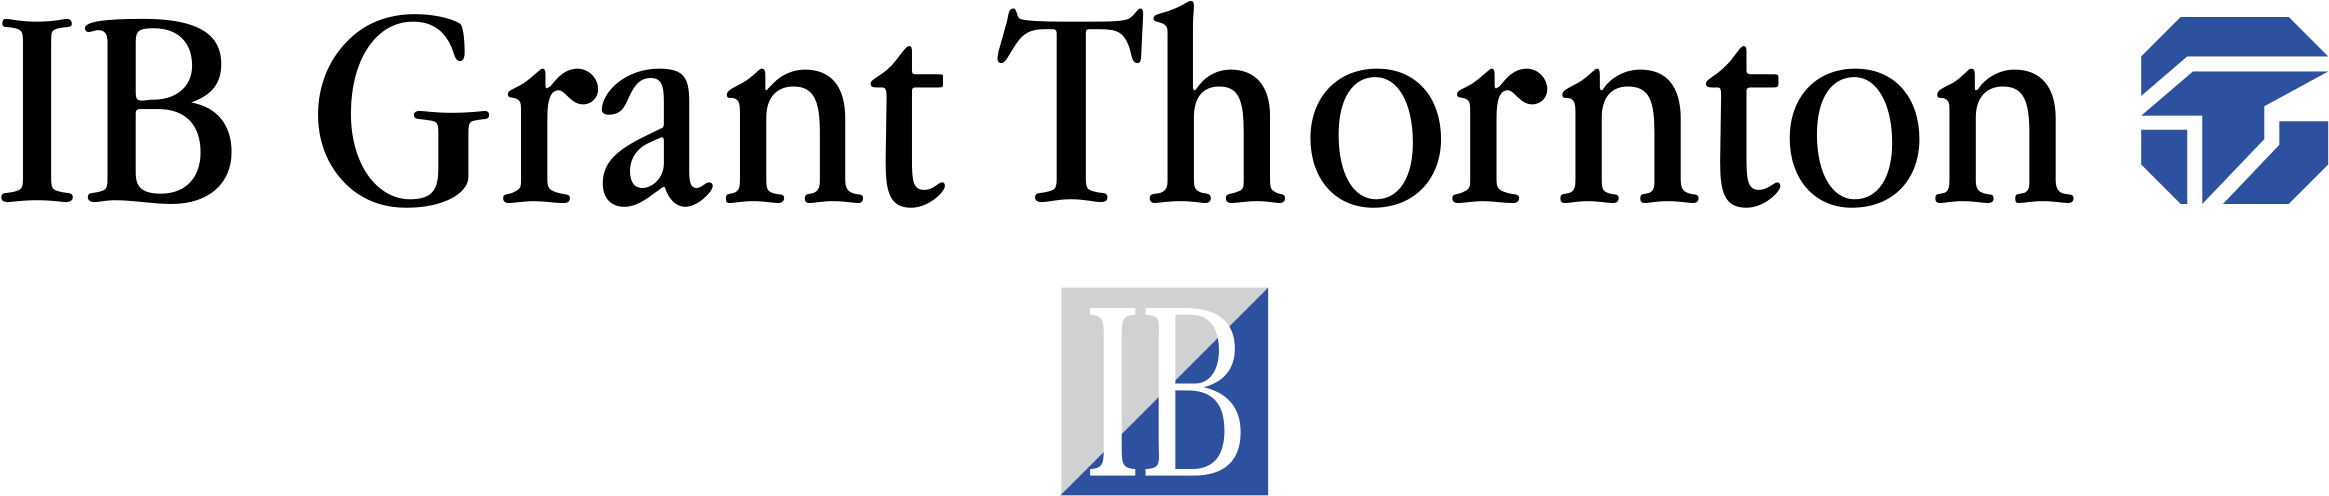 Ib Grant Thornton Logo Png Transparent - Grant Thornton Logo Black And White (2400x2400), Png Download